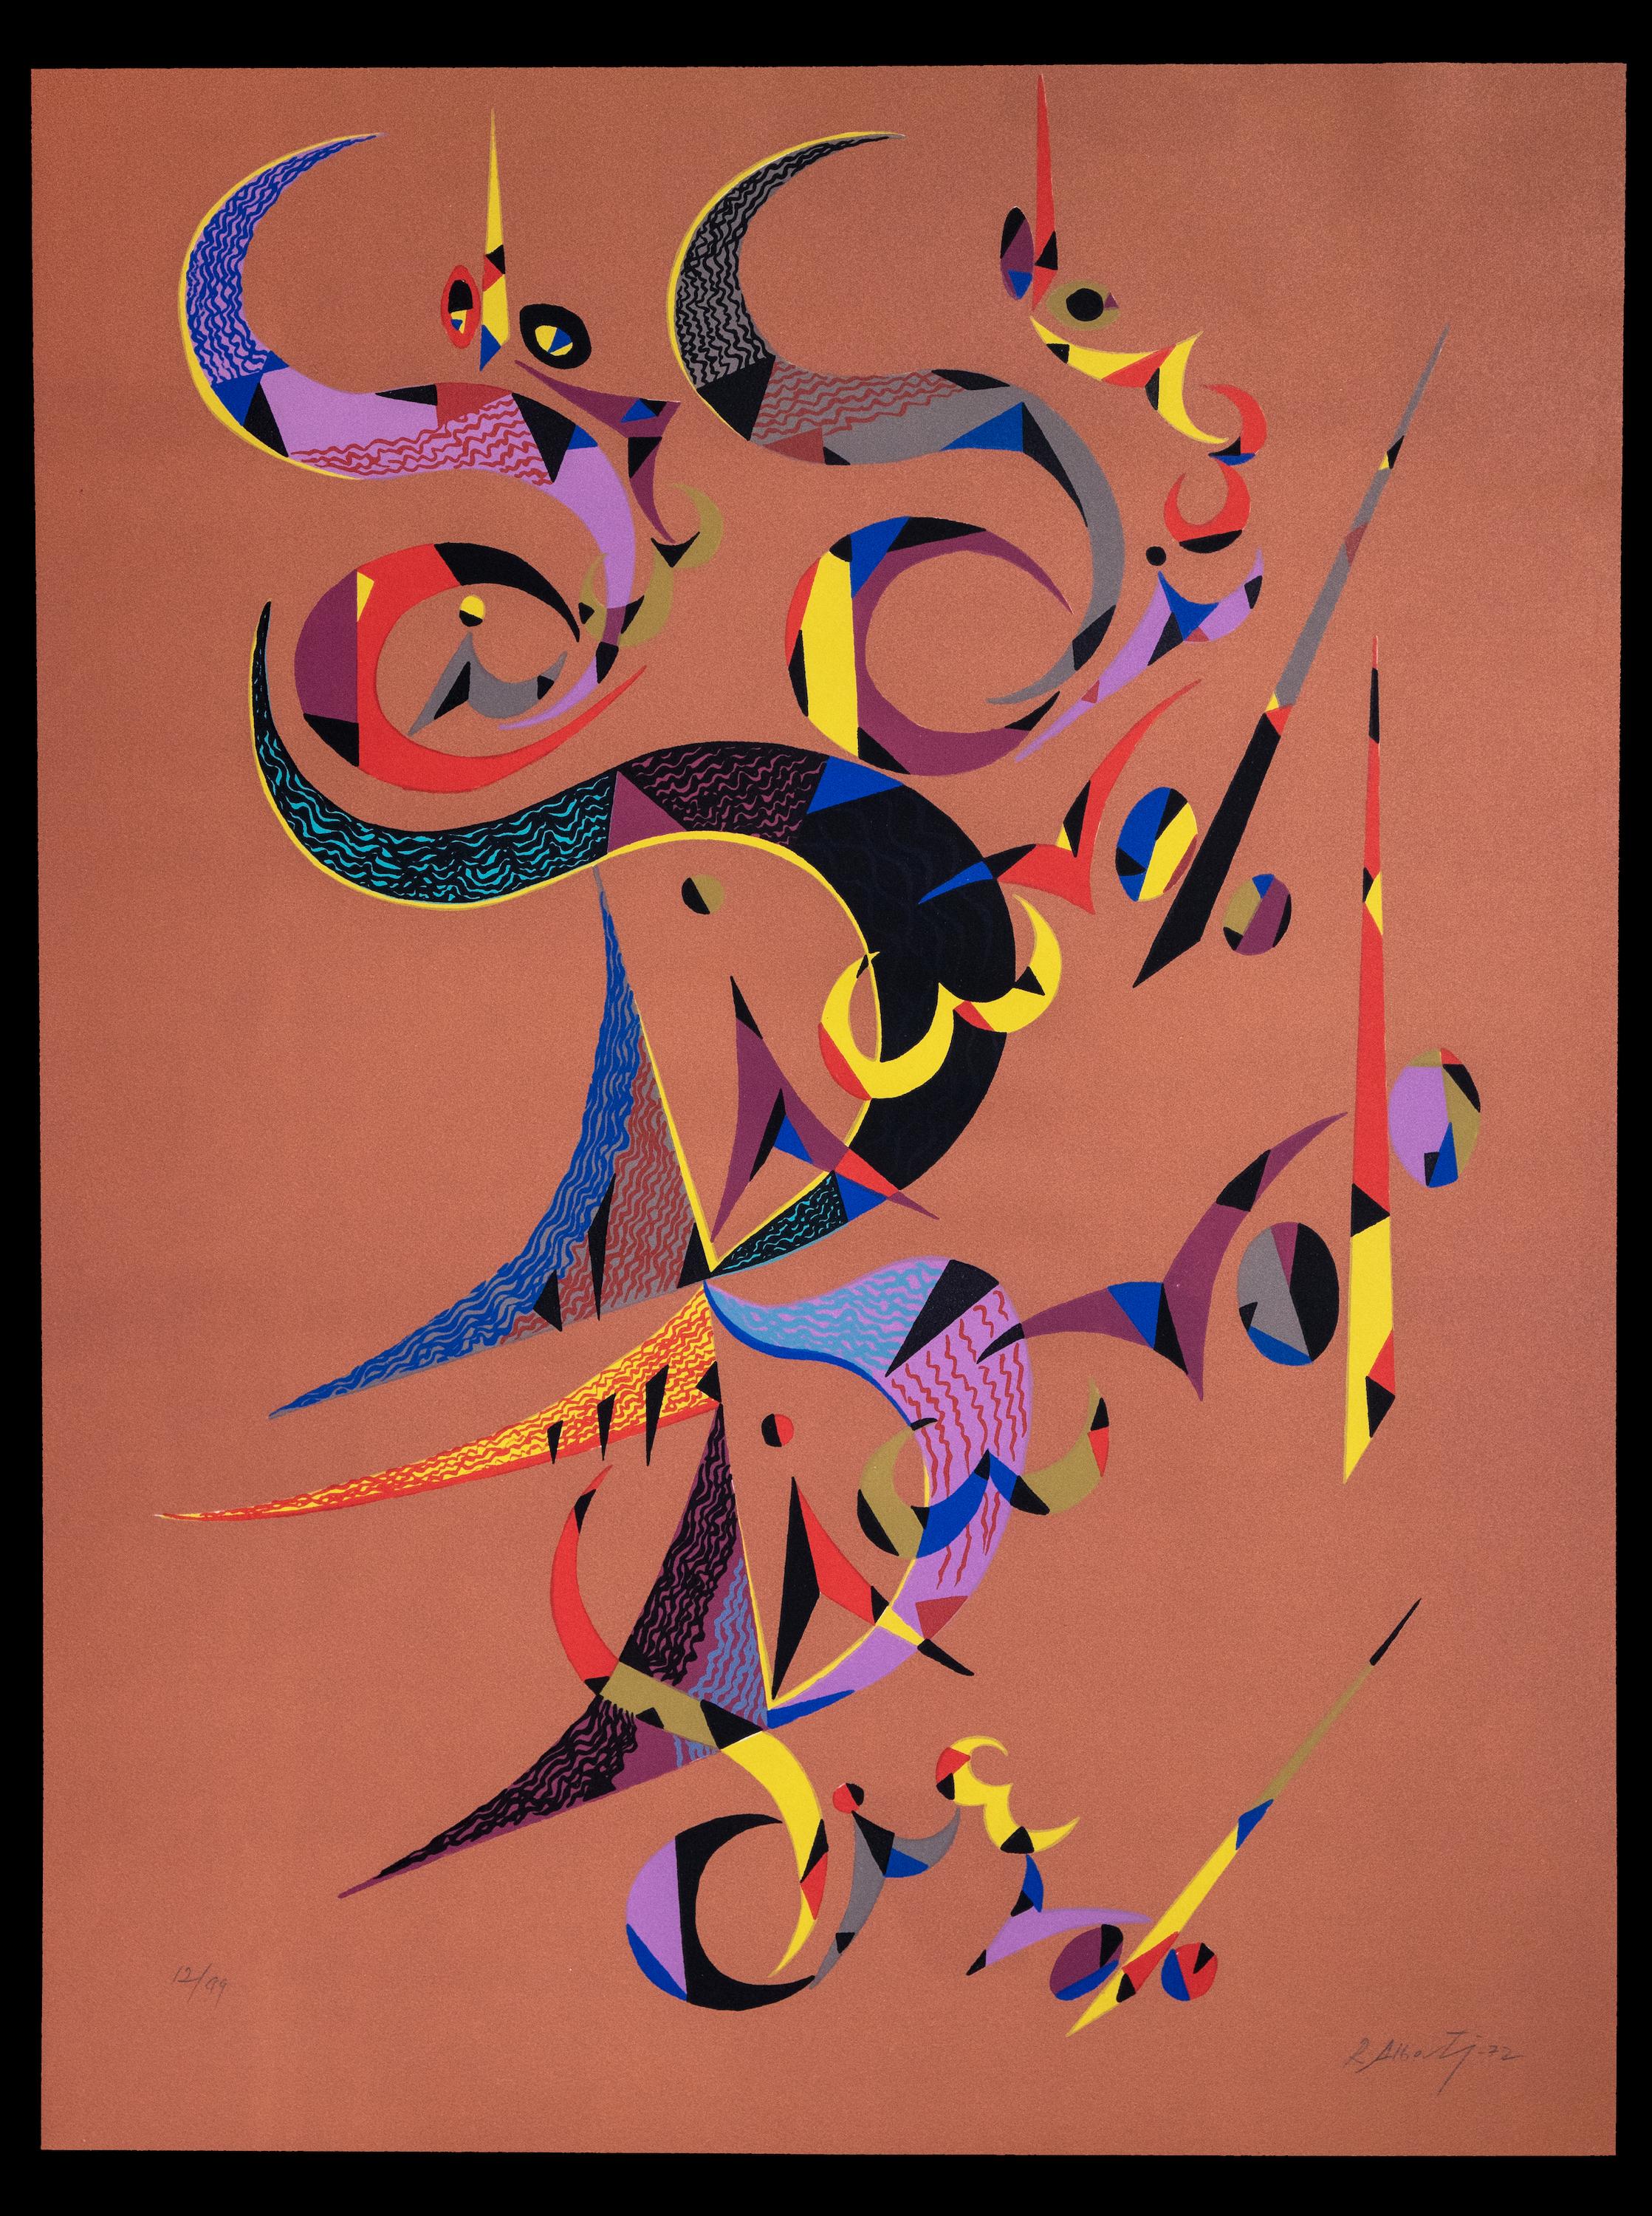 Rafael Alberti Abstract Print - Composition - Original Lithograph by Raphael Alberti - 1972